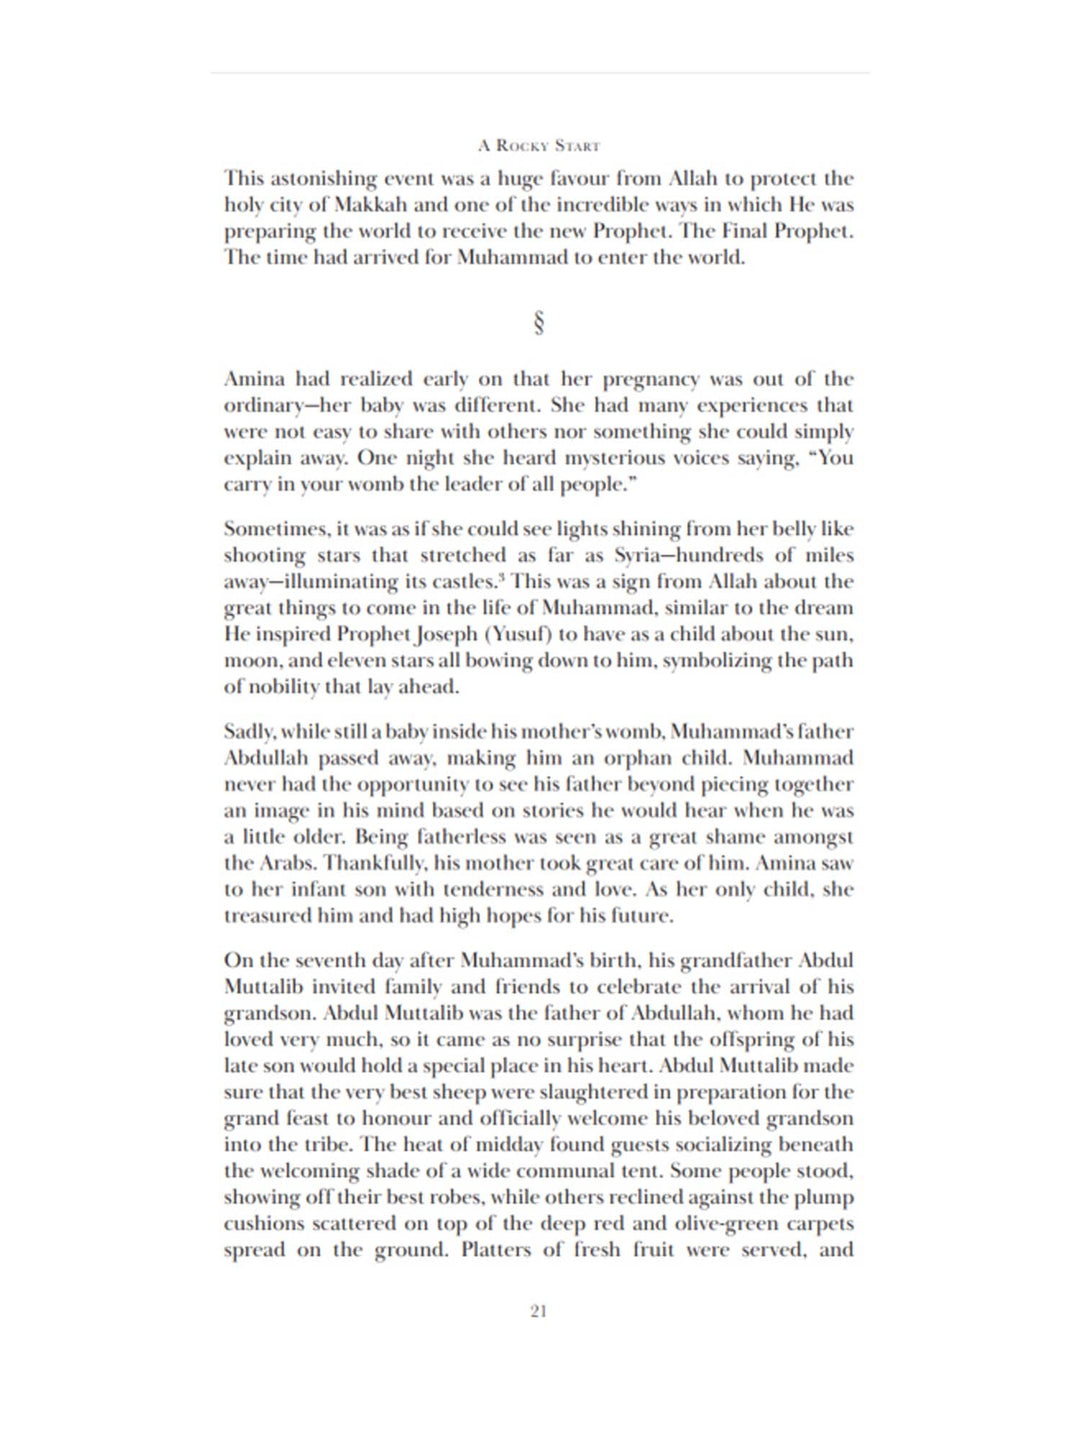 The Simple Seerah - Part 1 - Asim Khan (Paperback)